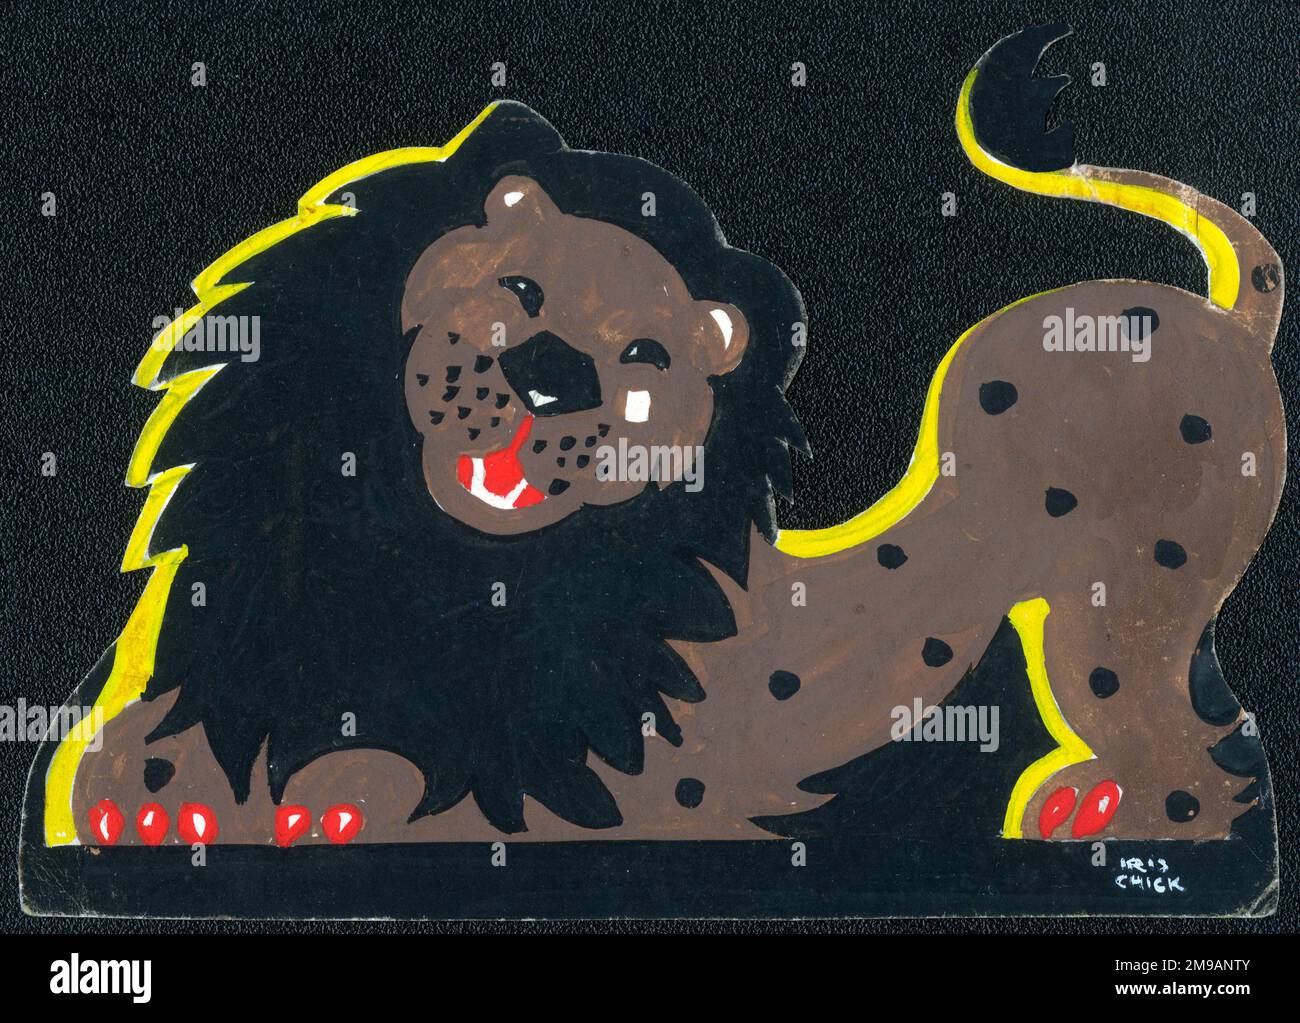 Original Artwork - The Lion in Noah's Ark with black spots - Christmas design. Stock Photo